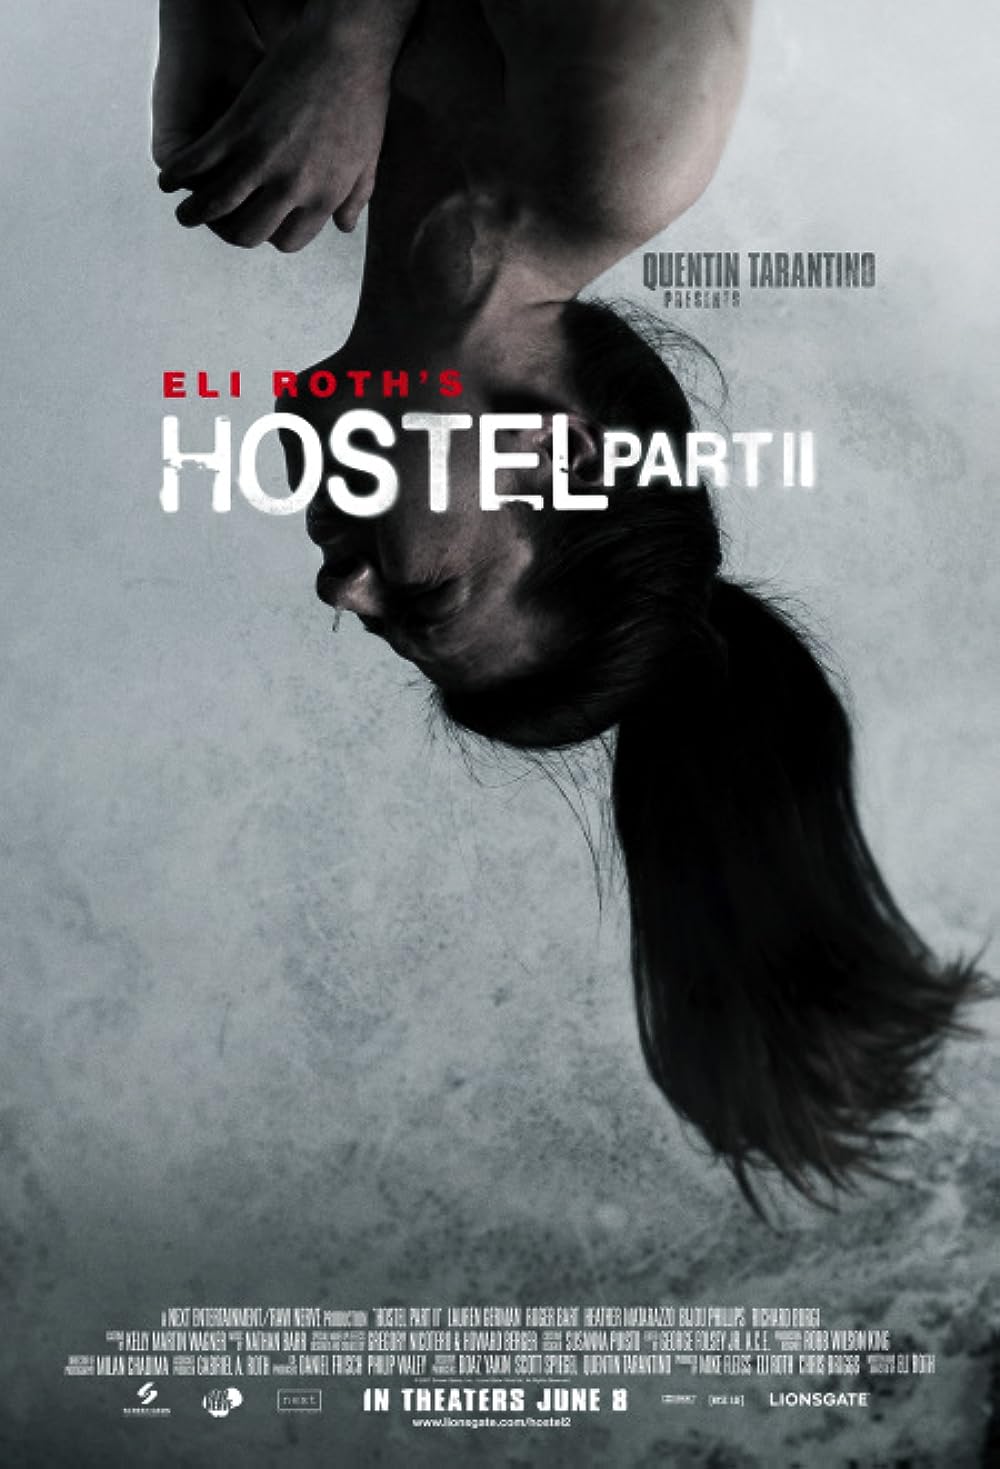 FULL MOVIE: Hostel: Part II (2007)